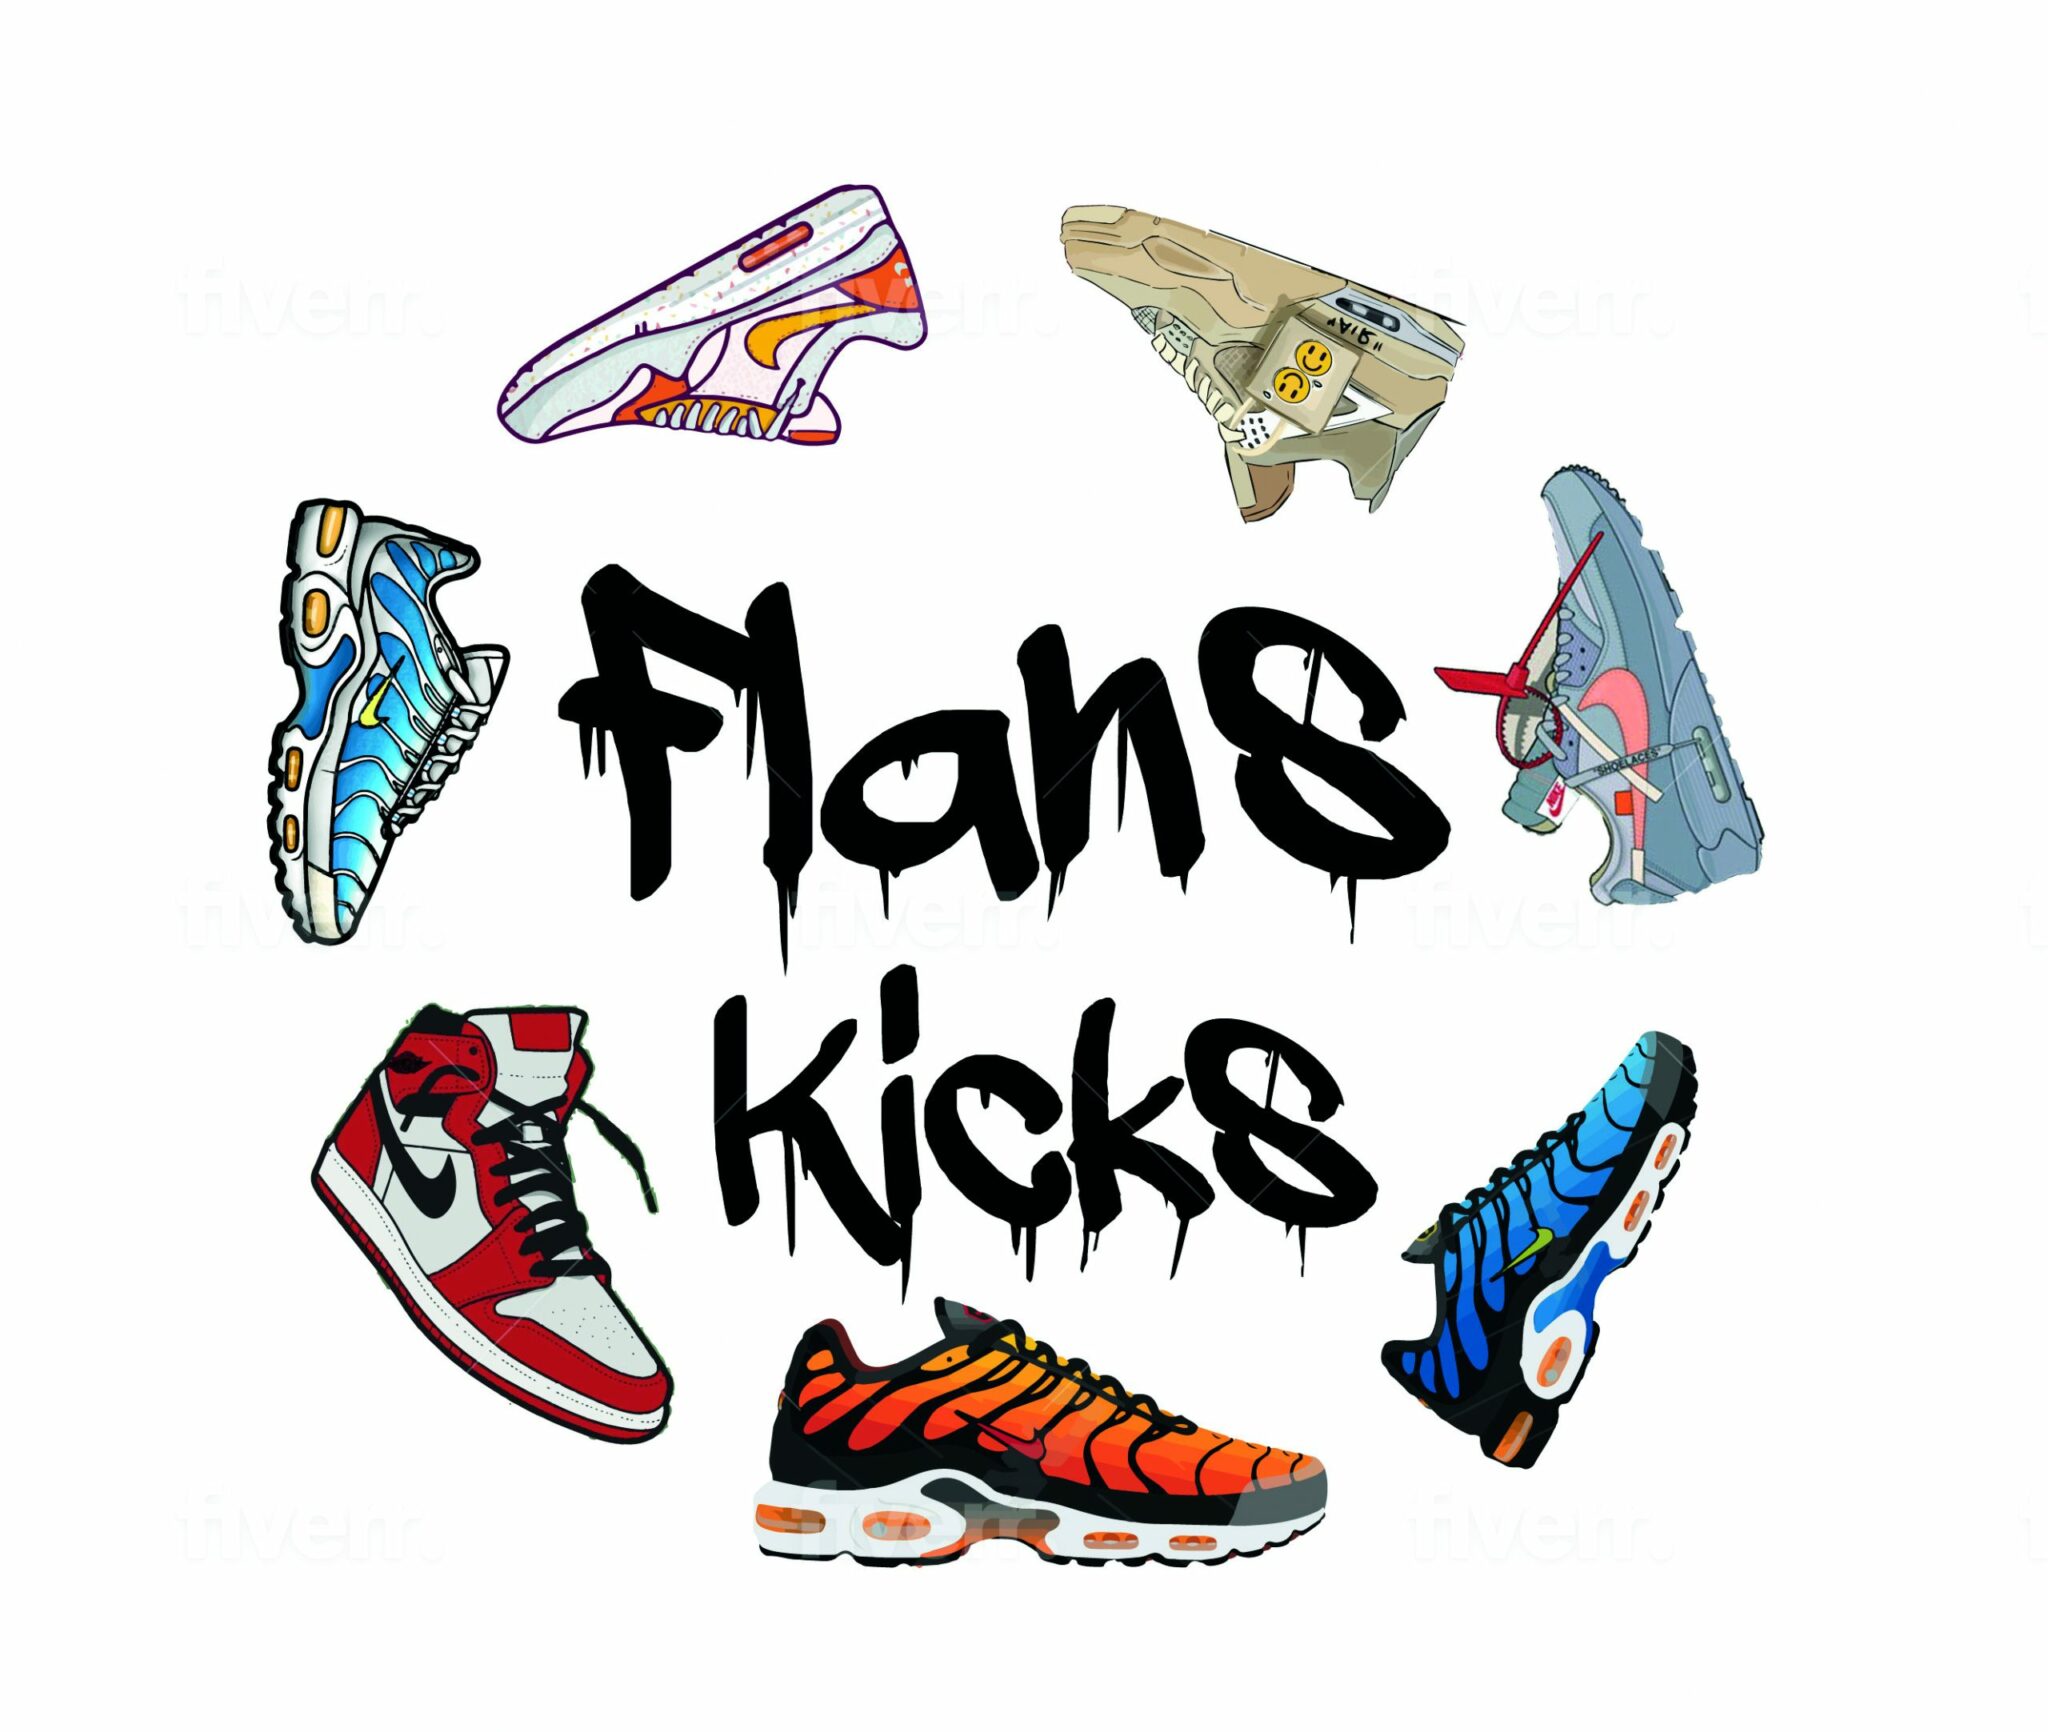 Flans kicks logo